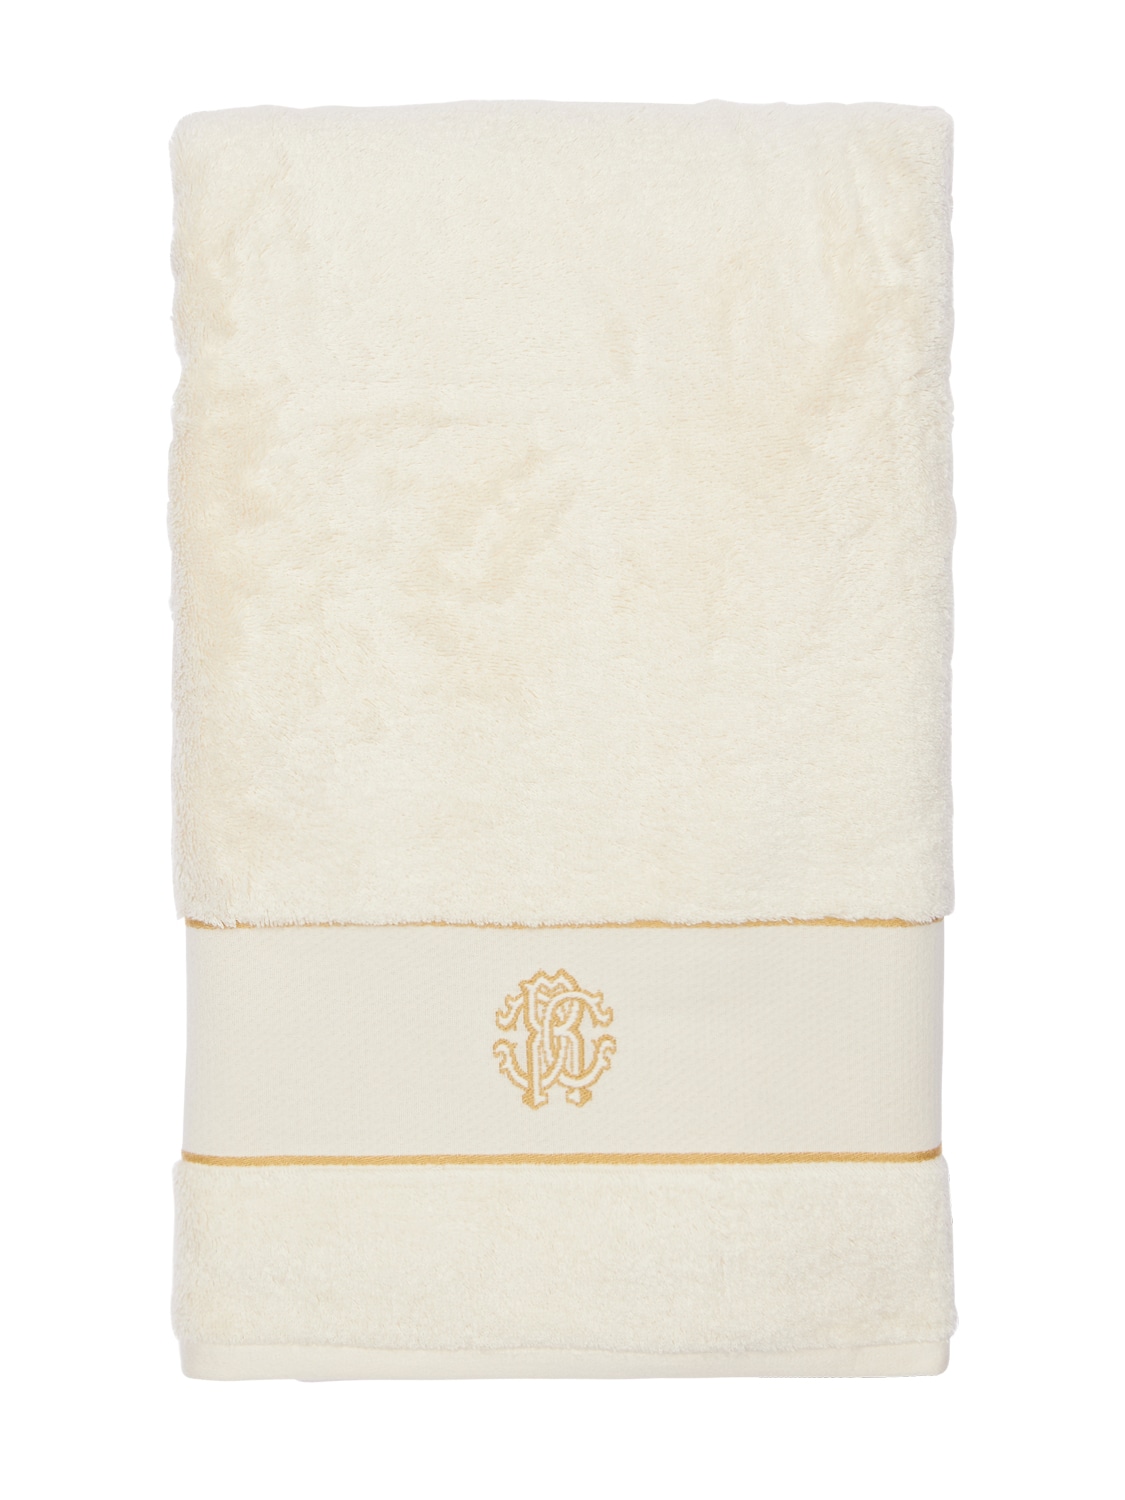 Image of Cotton Bath Towel